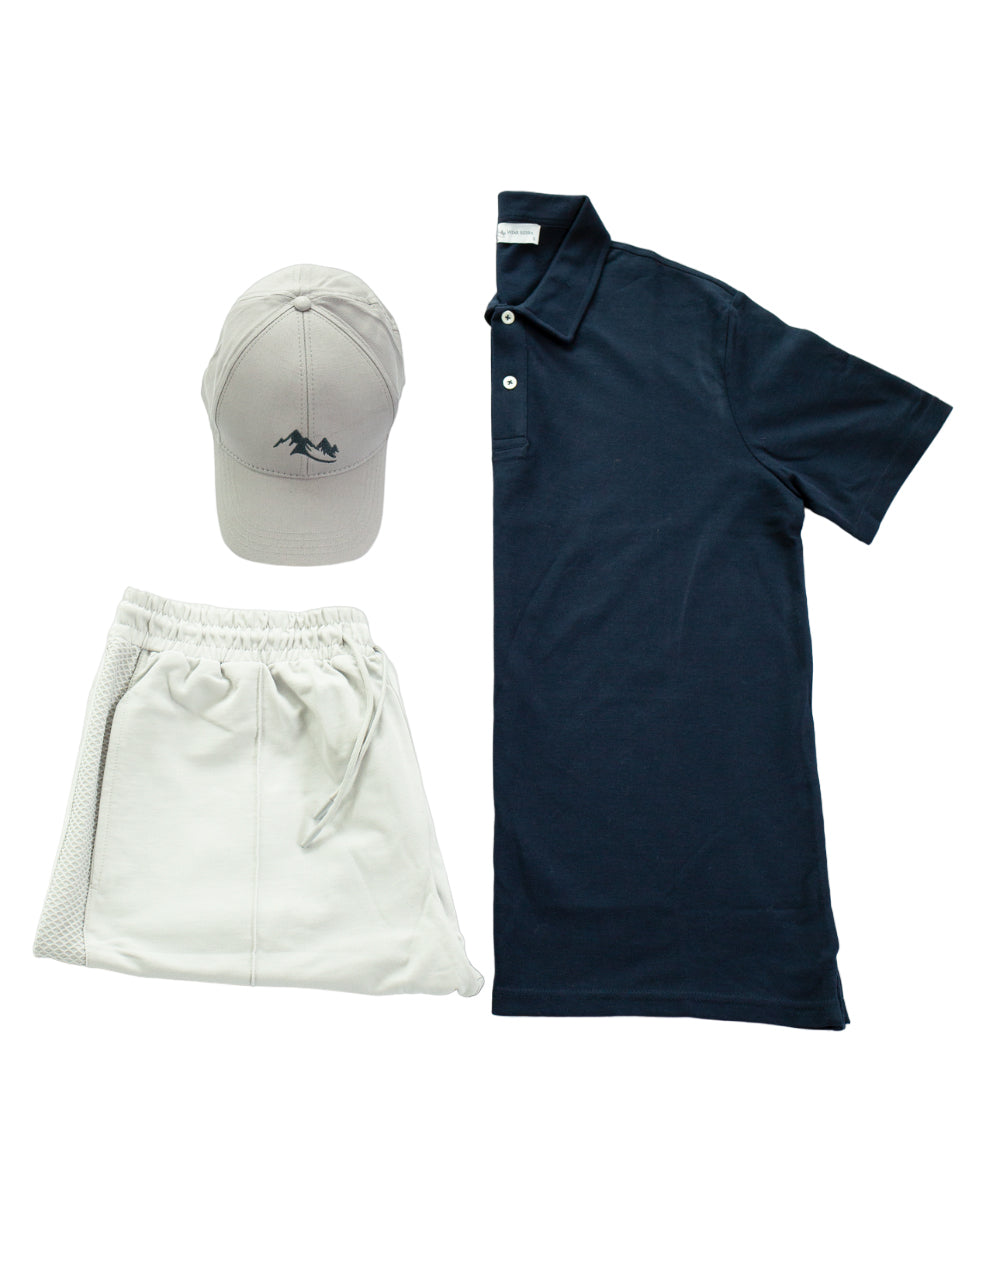 Men's Casual Wear Matched Set - Polo Shirt, 100% Cotton Shorts and Baseball Hat (3 Piece Set) - Wear Sierra